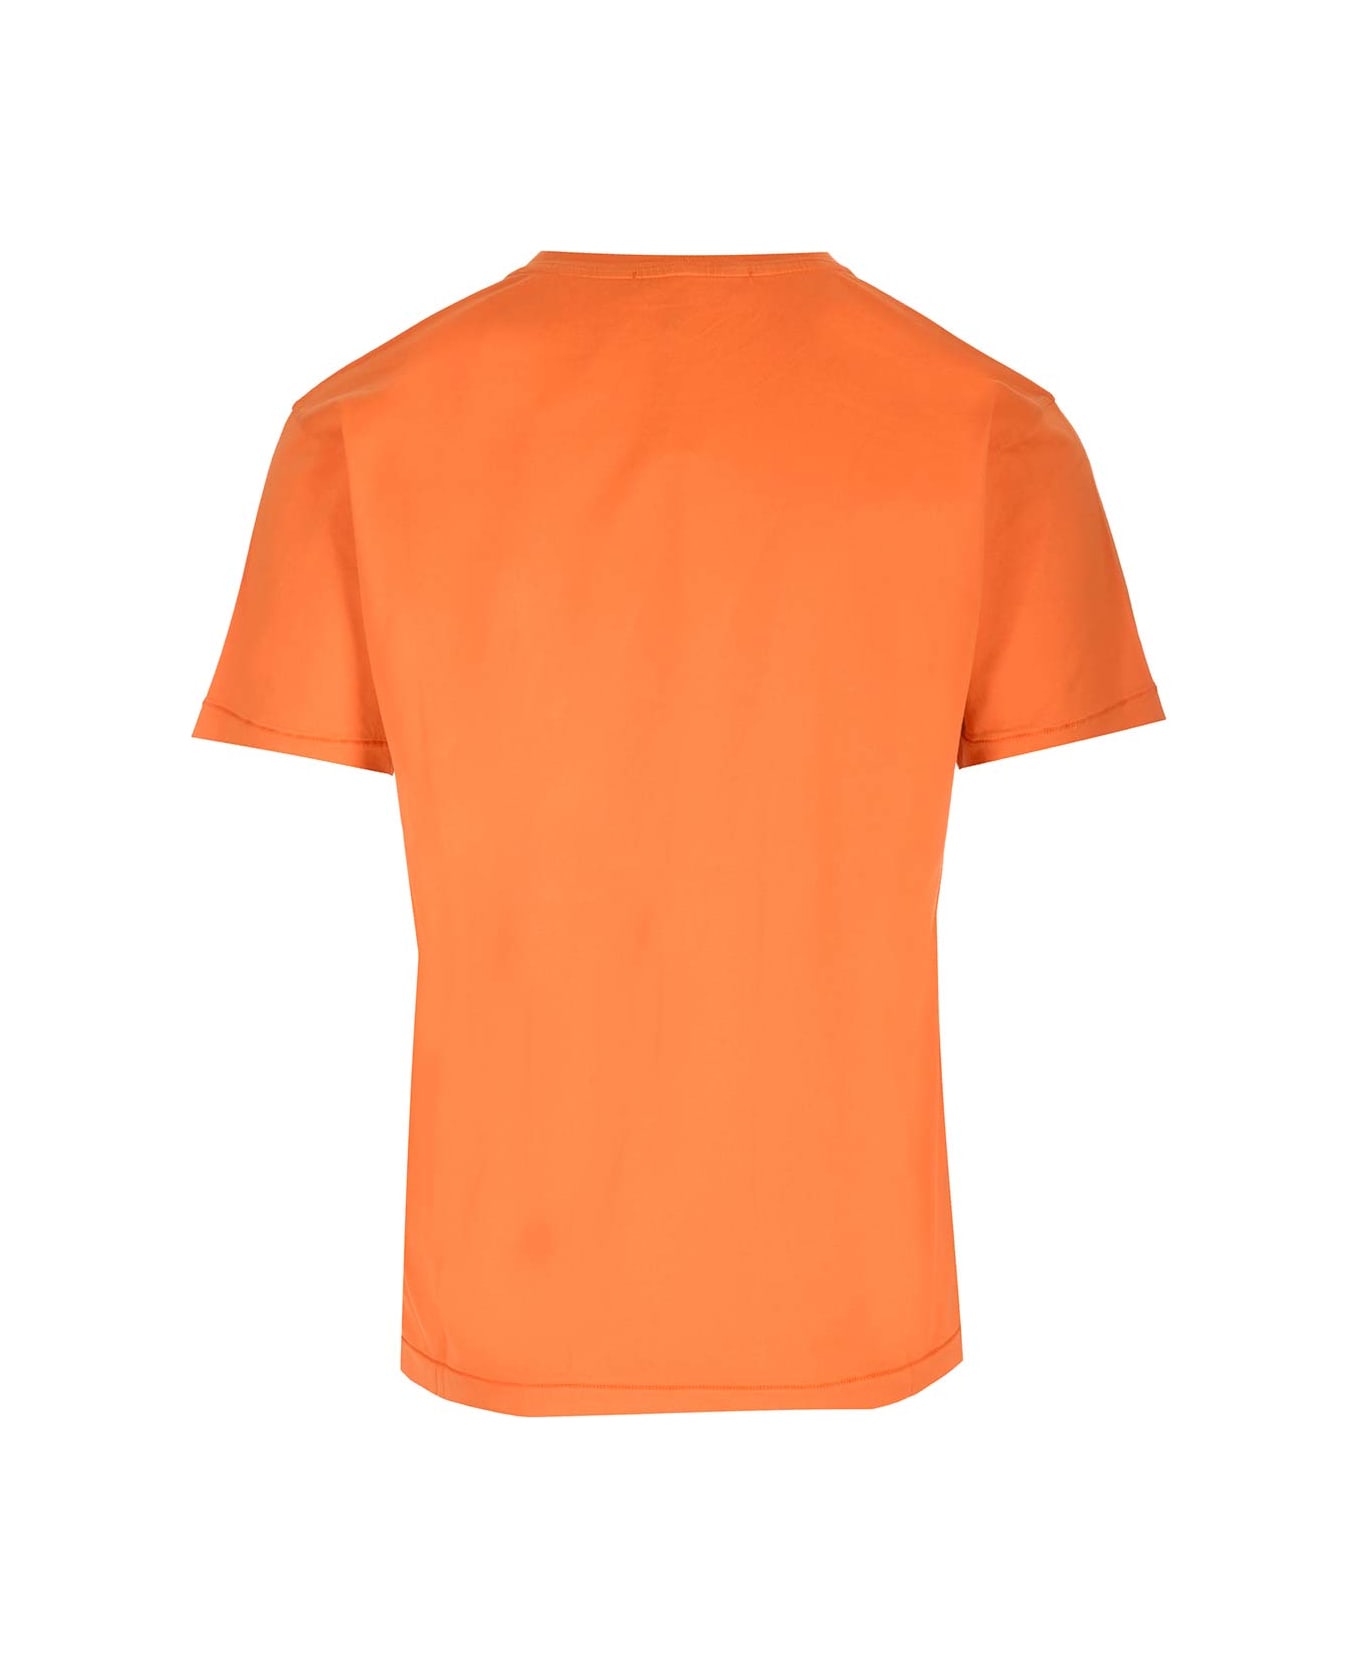 Stone Island Classic Fit T-shirt - Arancione